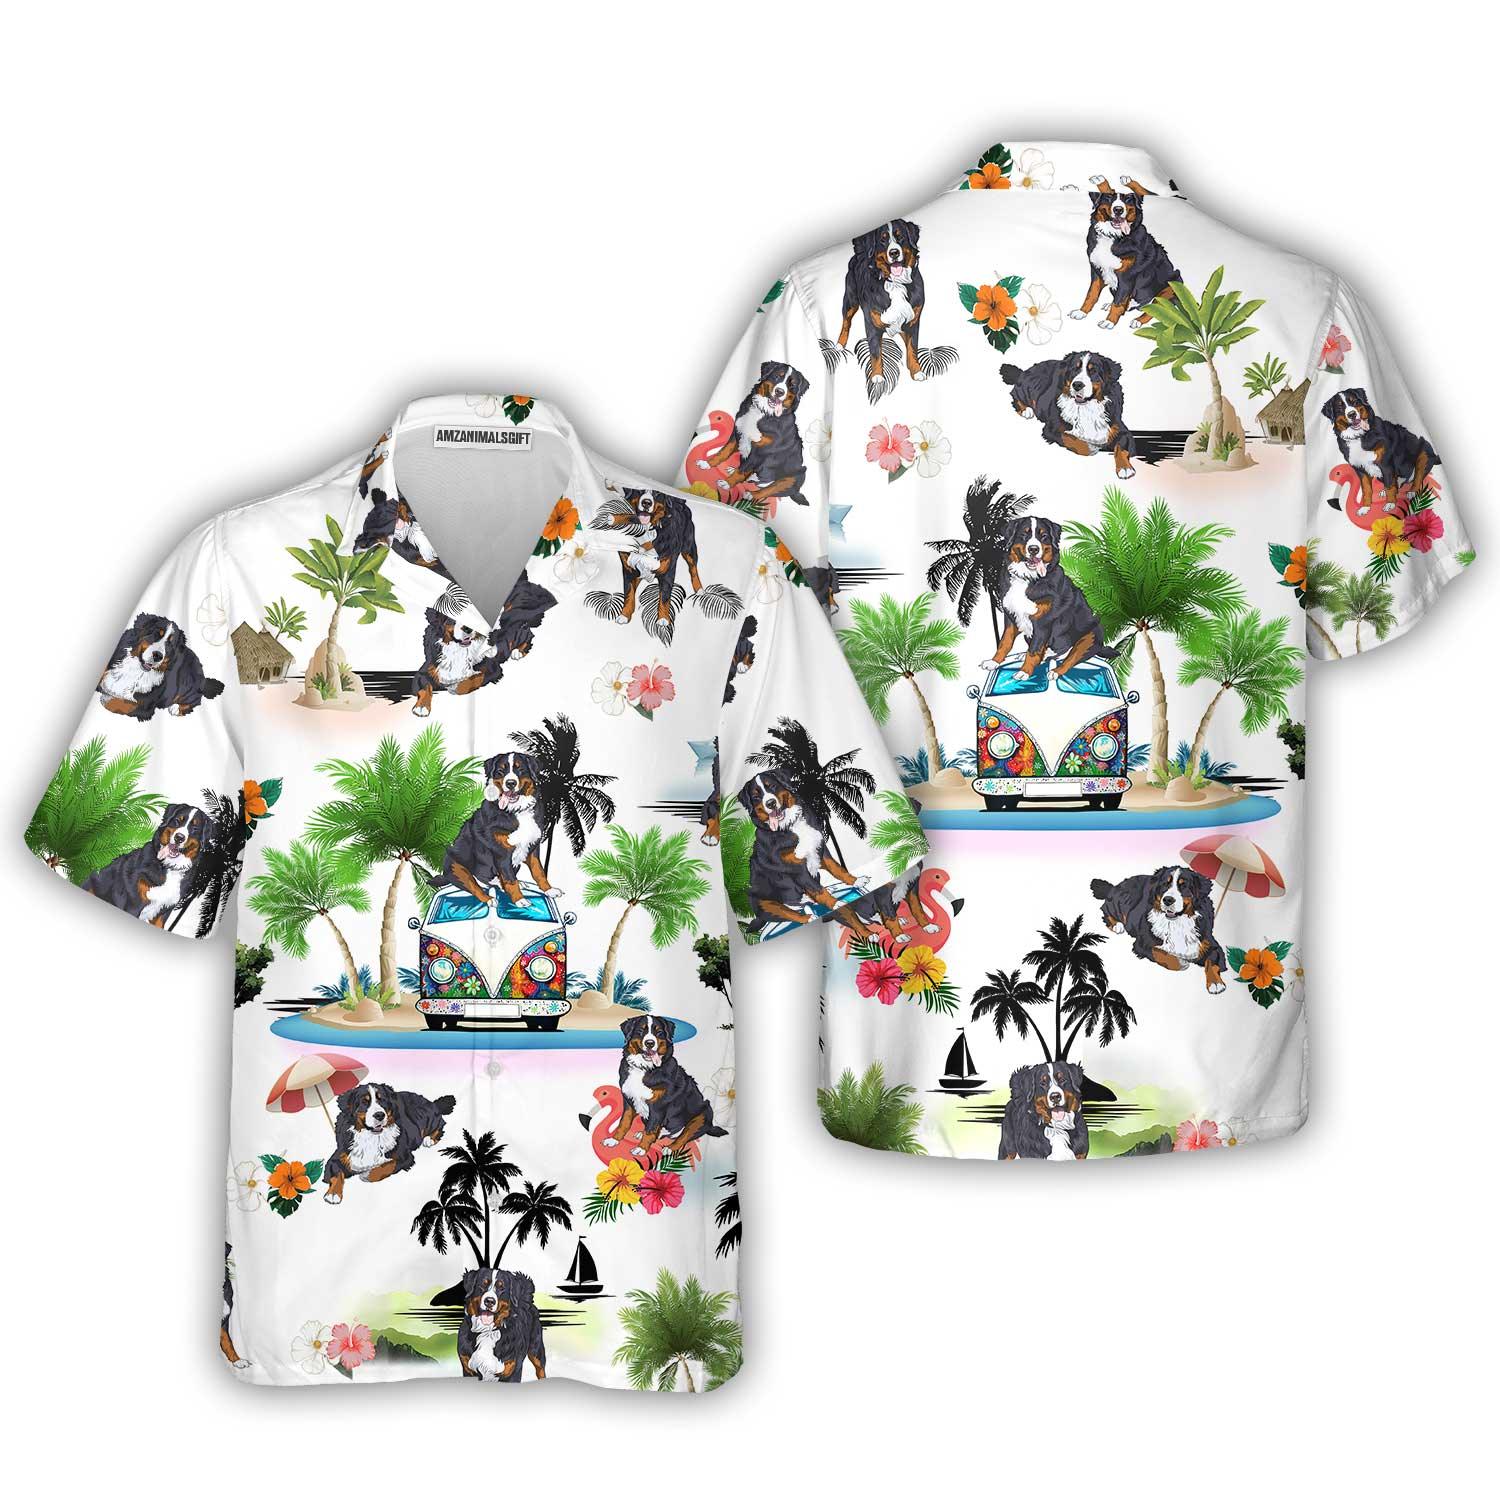 Bernese Mountain Hawaiian Shirt, Dog Vacation Aloha Shirt For Men Women - Perfect Gift For Dog Lovers, Husband, Boyfriend, Friend, Family, Wife - Amzanimalsgift